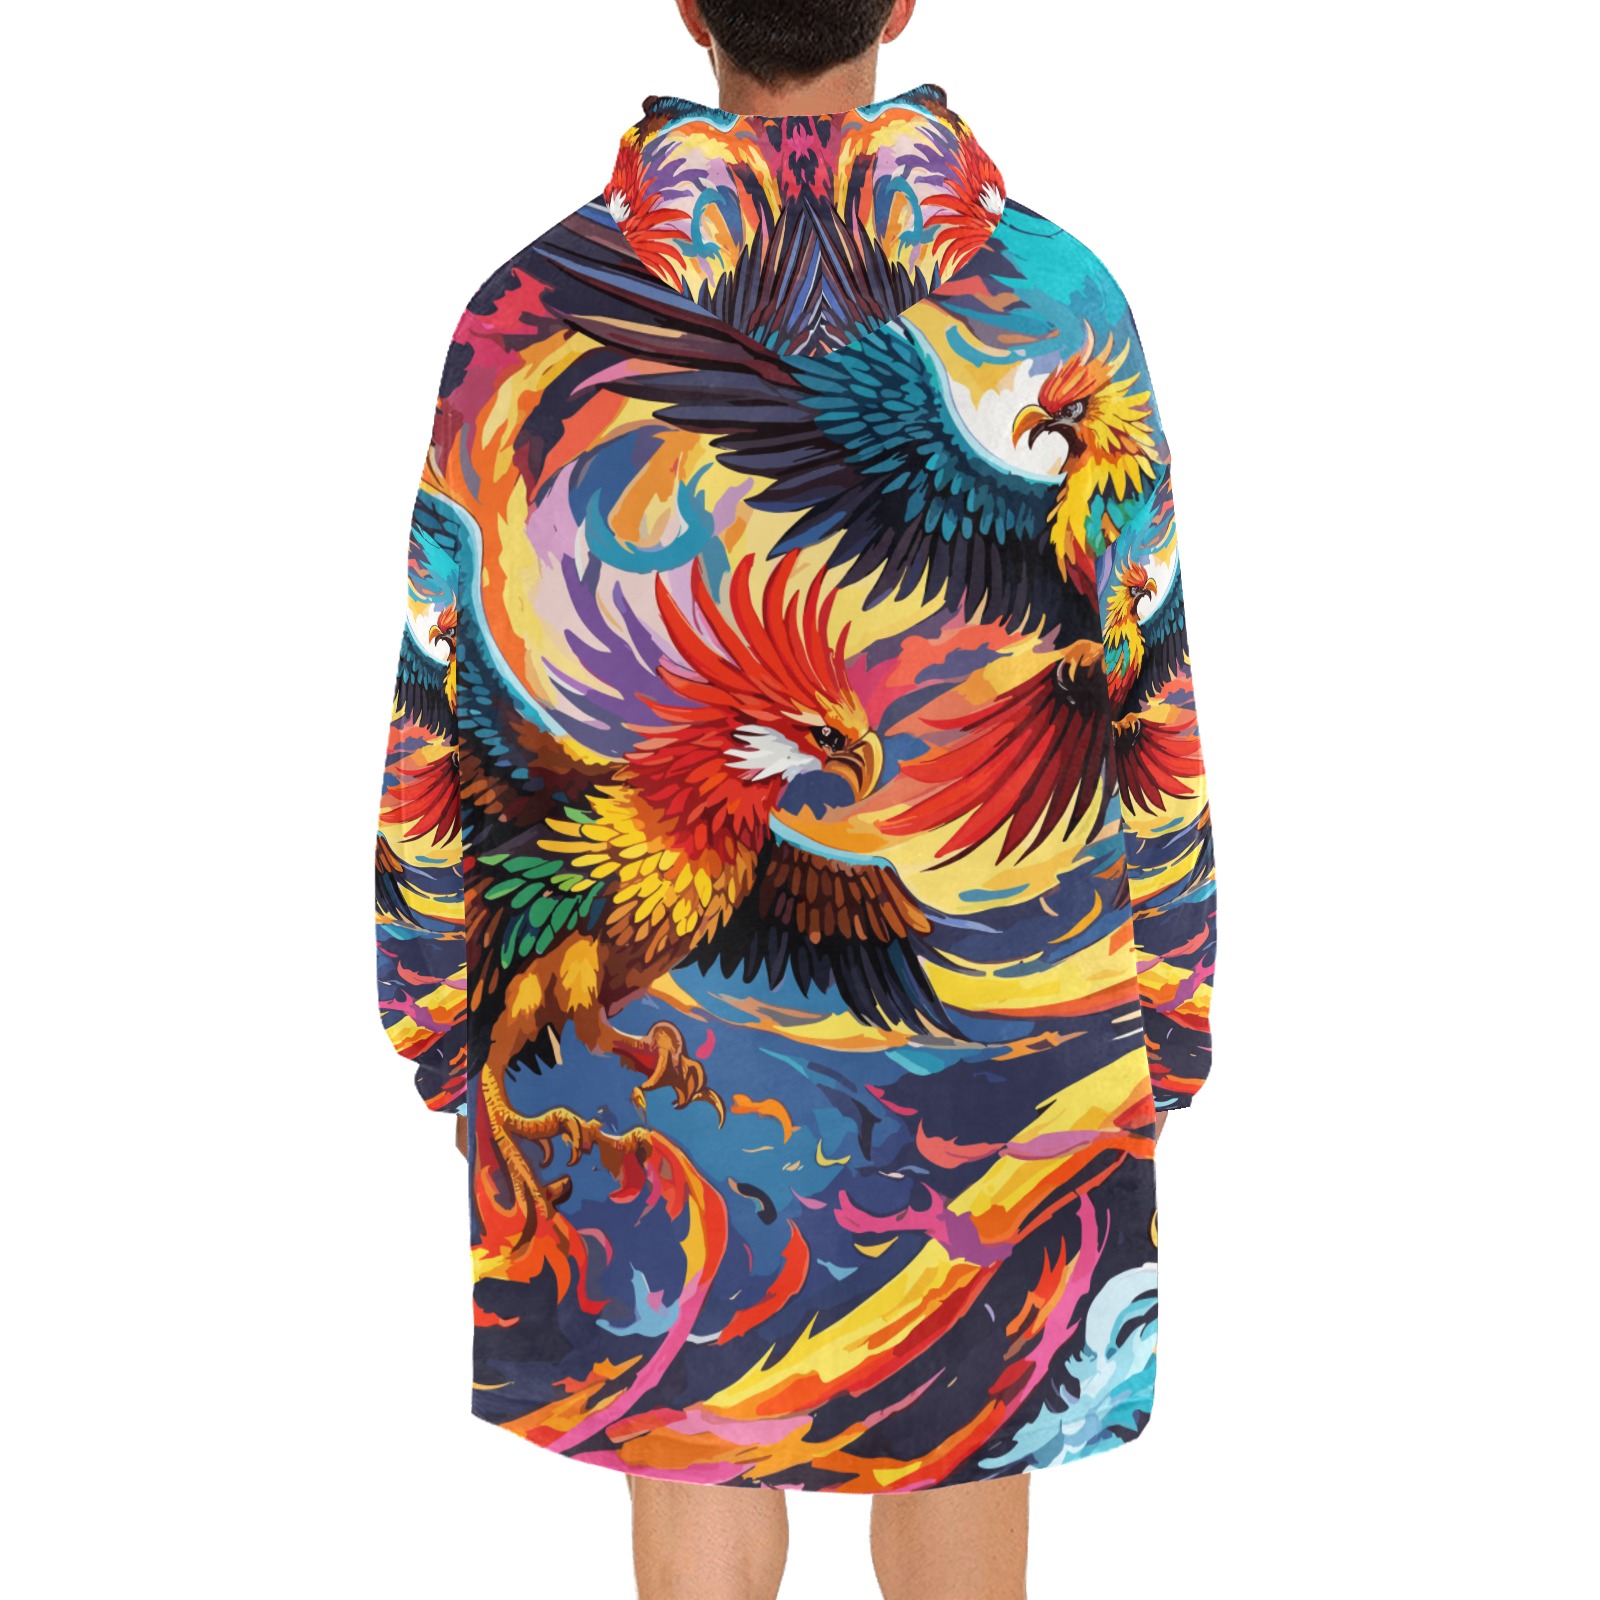 Magnificent fantasy phoenix birds and fire art. Blanket Hoodie for Men